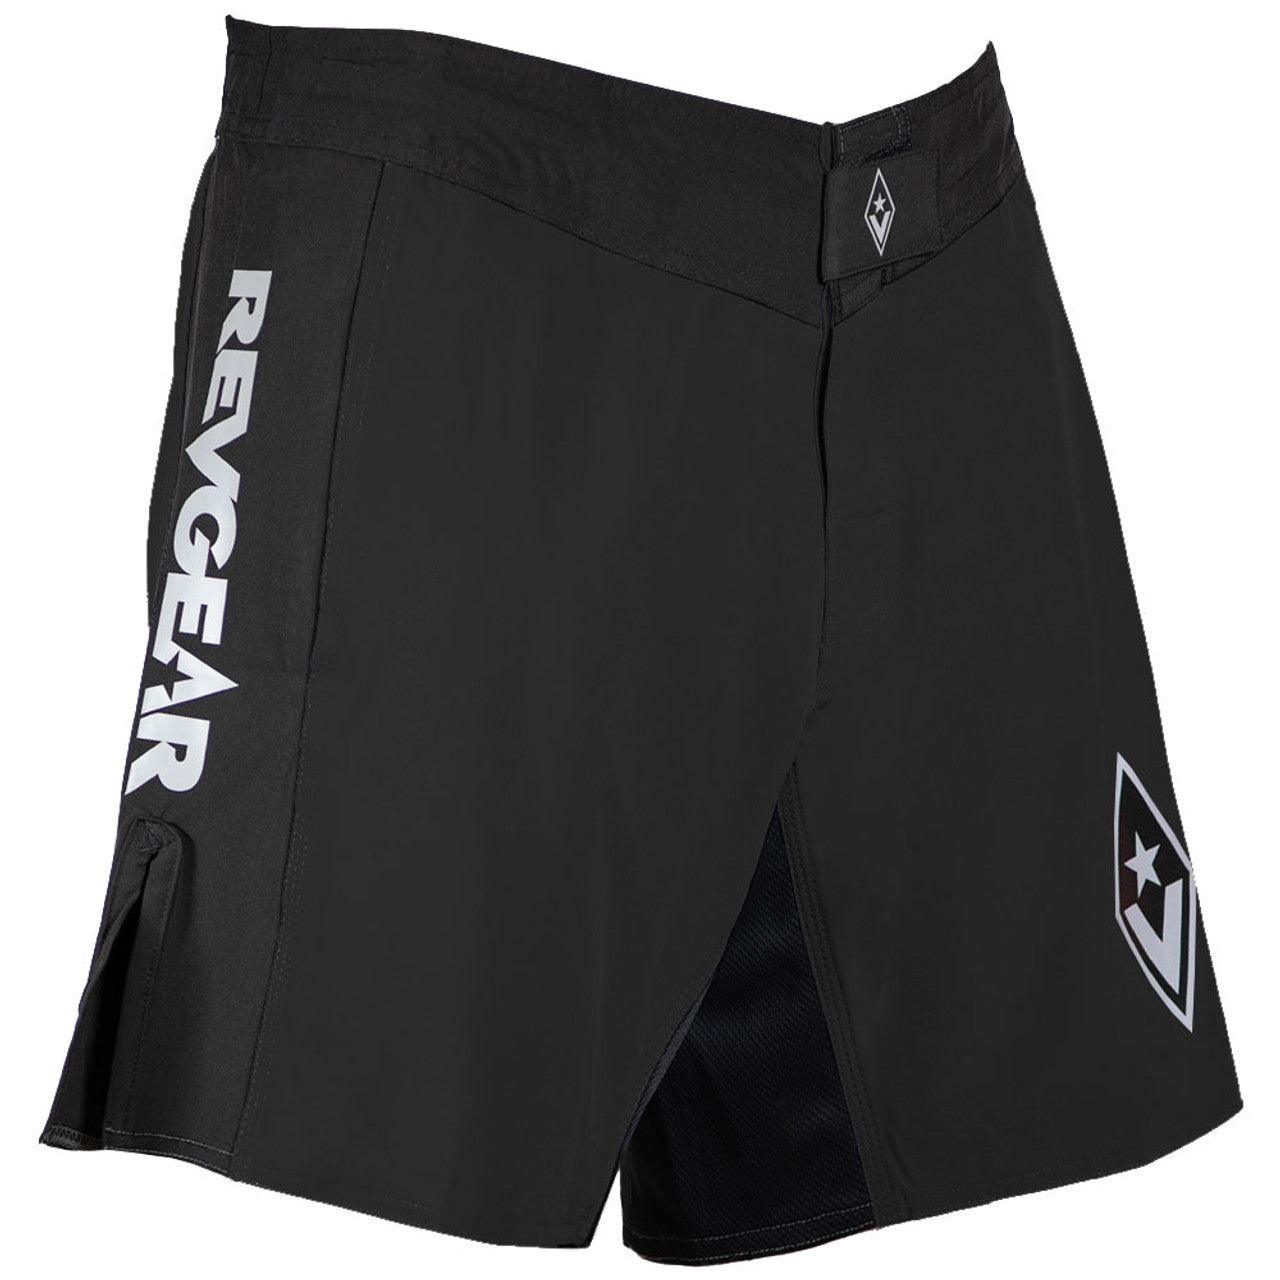 Revgear Stealth Hybrid MMA Shorts Black / Gray - Violent Art Shop